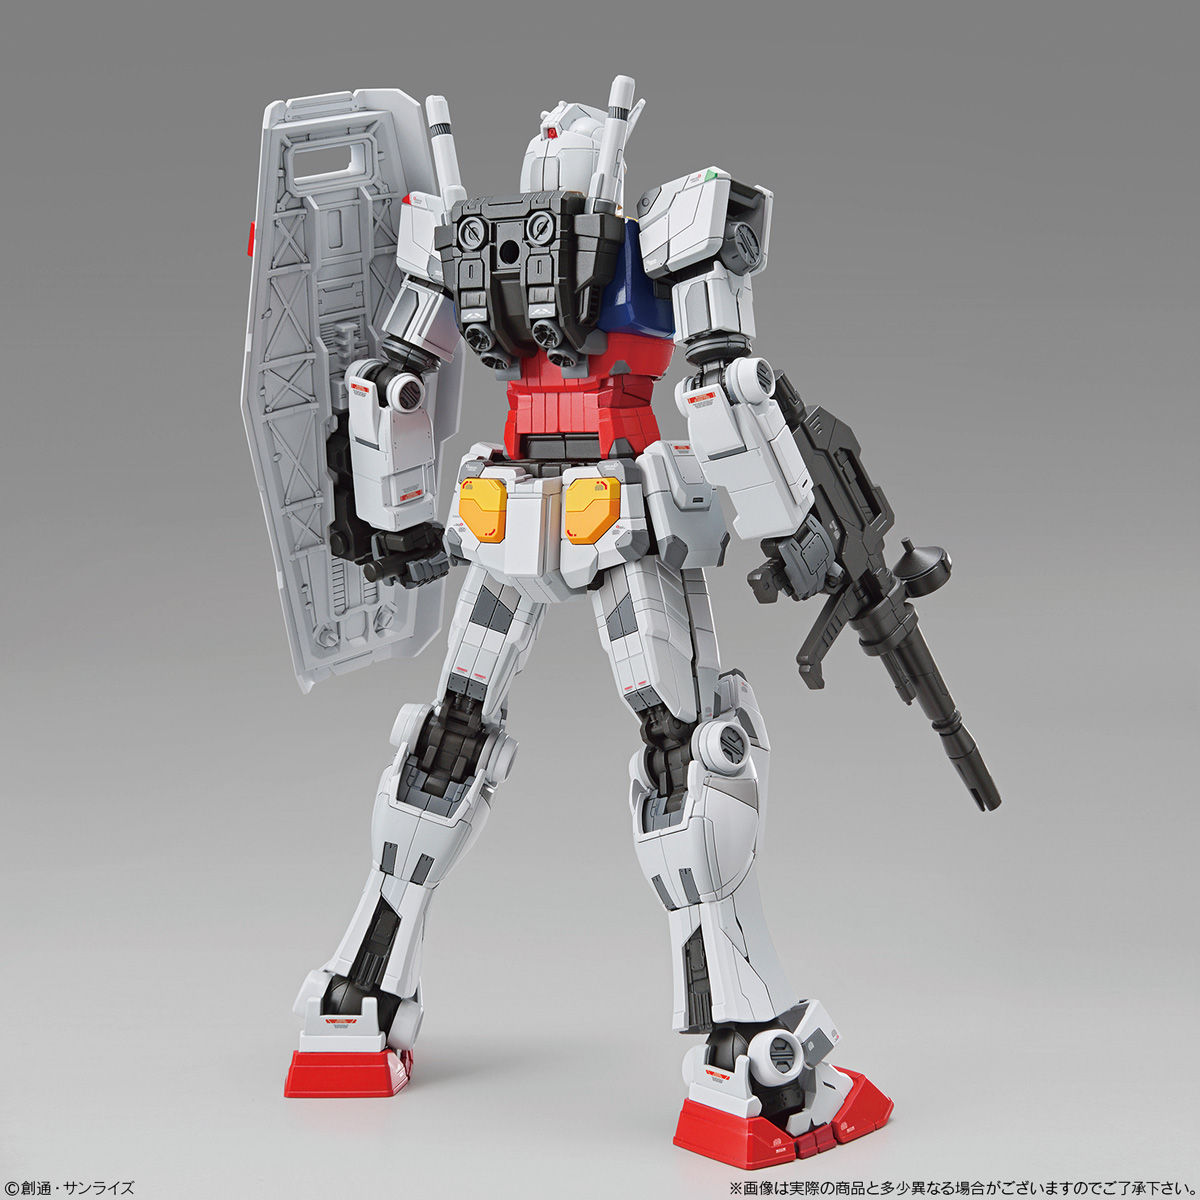 1/100 Scale Model RX-78F00 Gundam